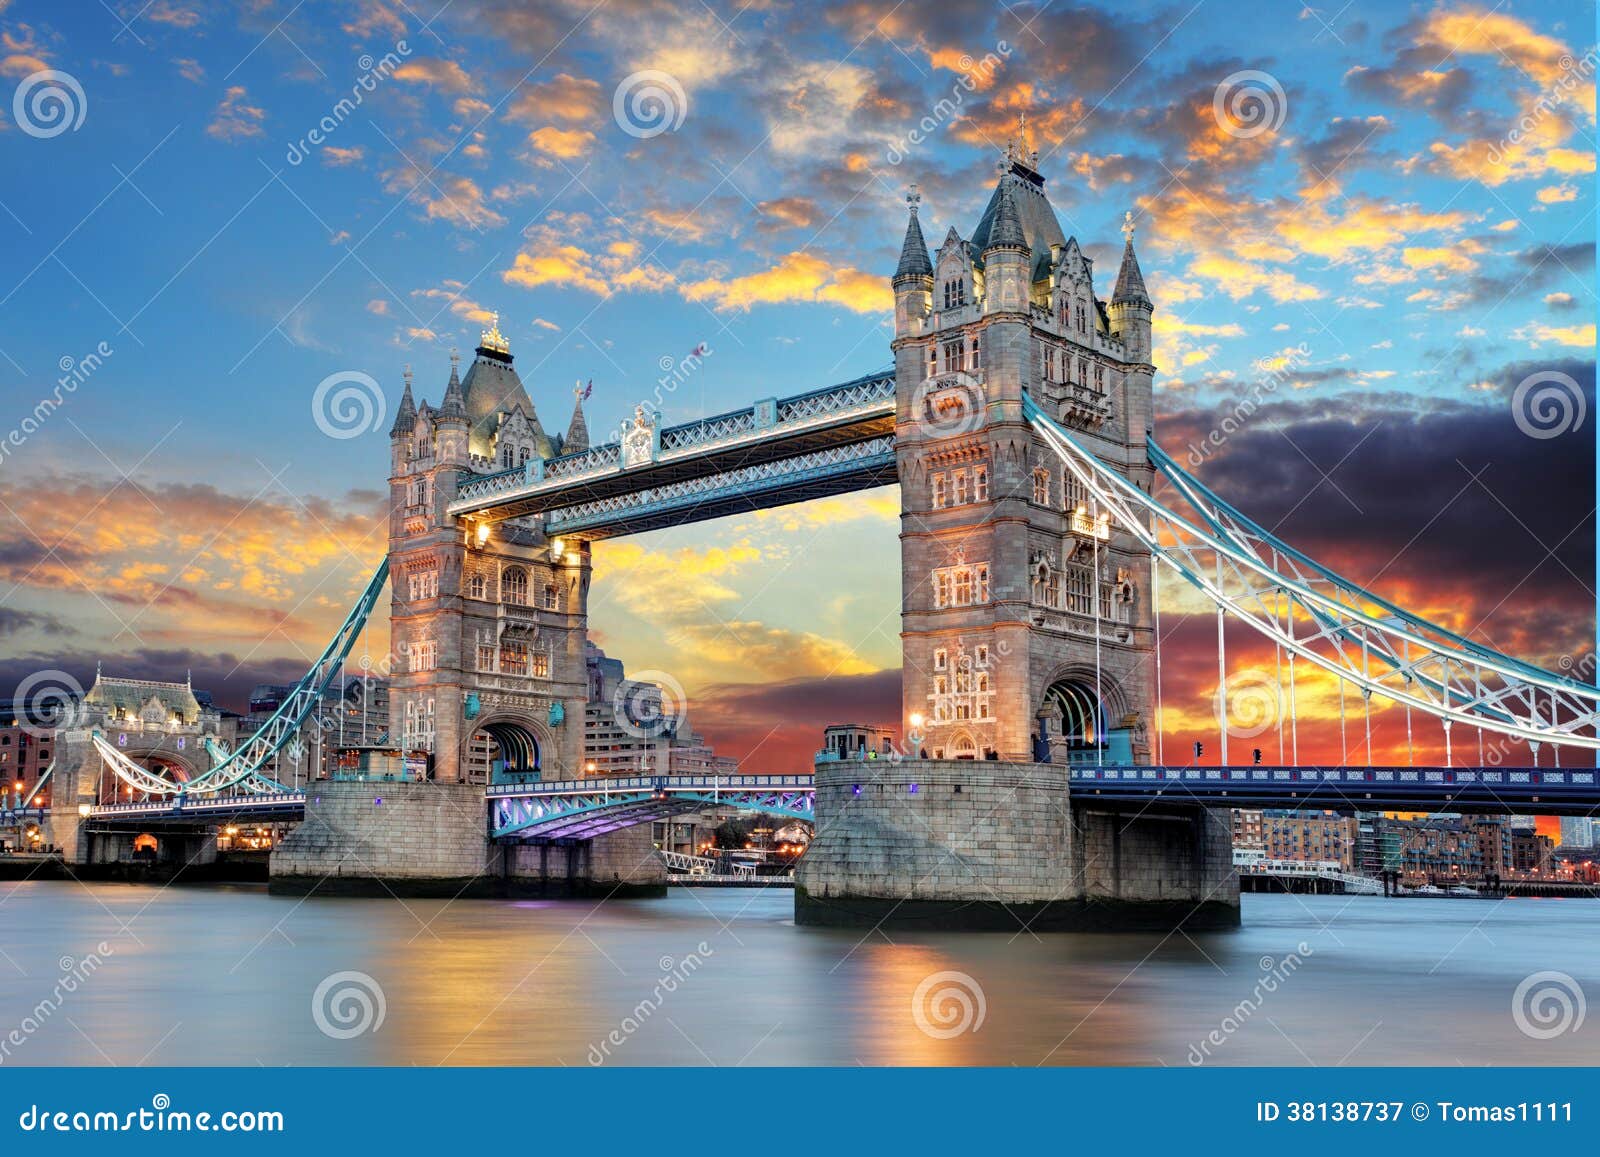 tower bridge in london, uk